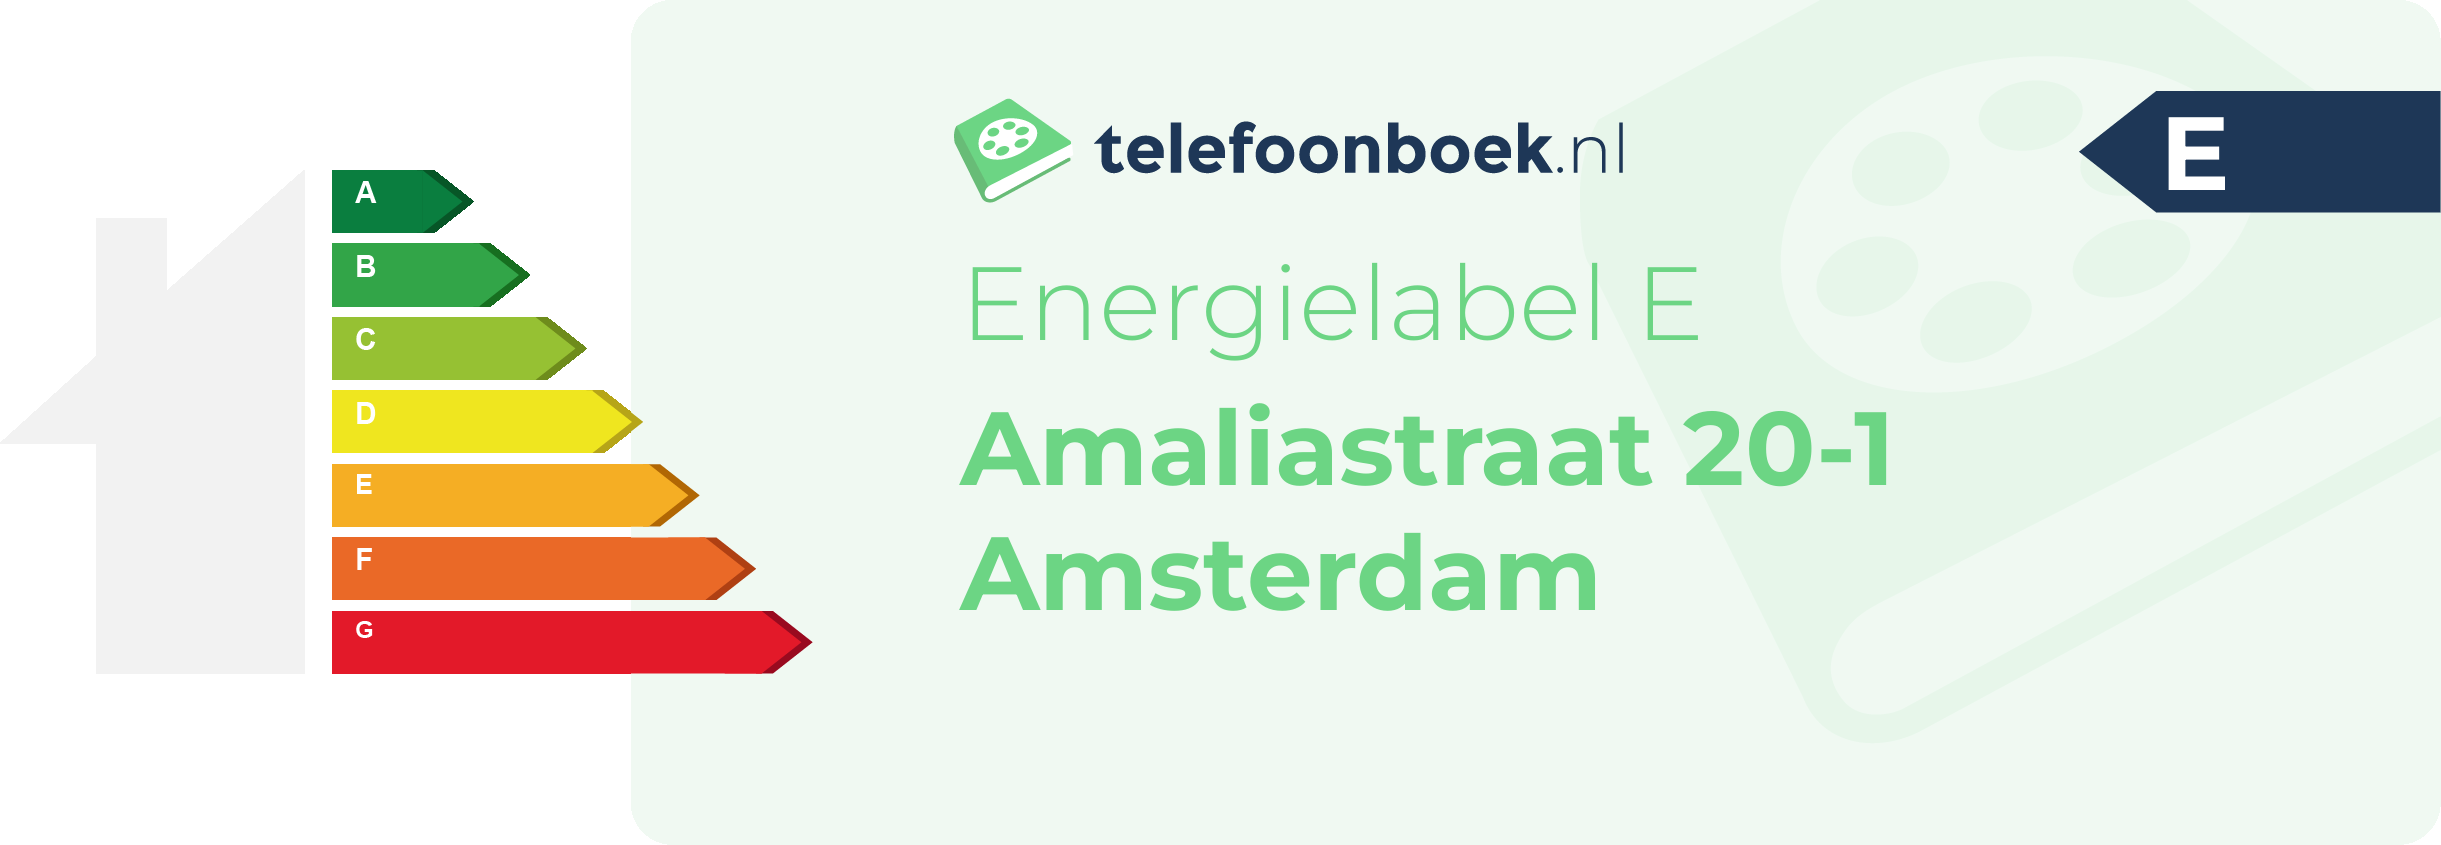 Energielabel Amaliastraat 20-1 Amsterdam